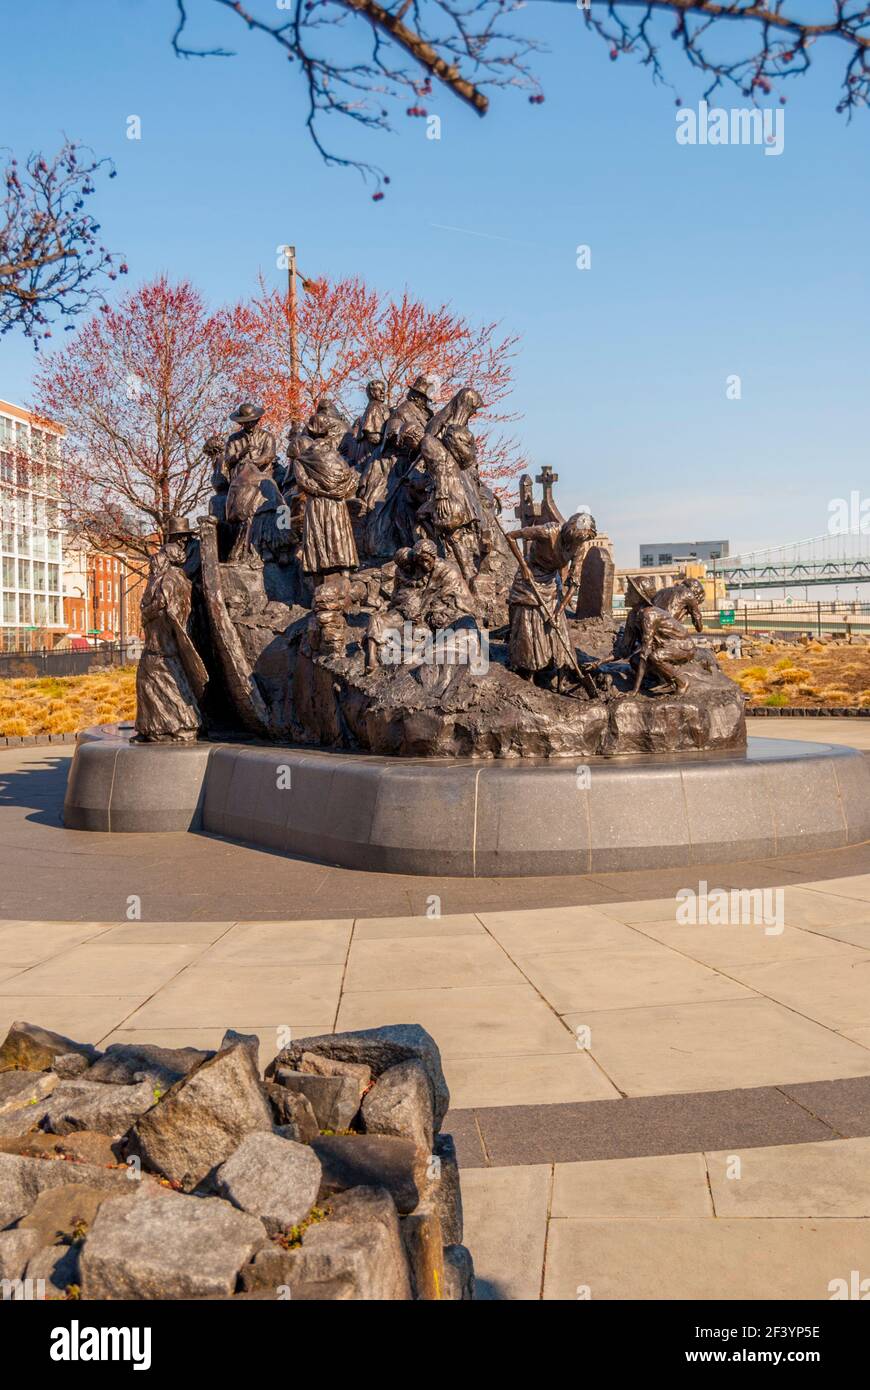 The Irish Memorial in I-95 Park commemorating The Irish immigrants, Philadelphia Pennsylvania Stock Photo